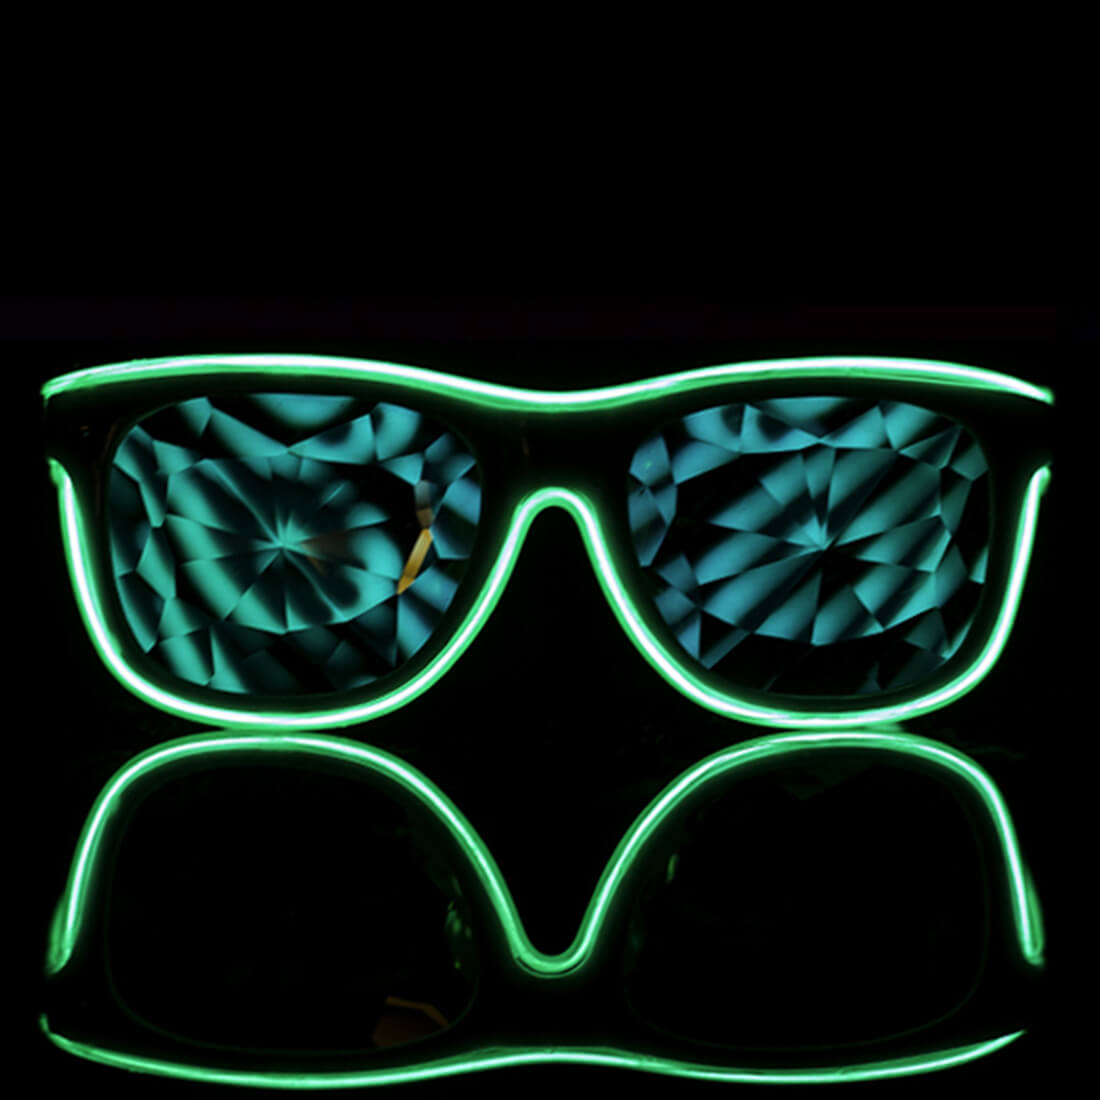 illuminated sunglasses